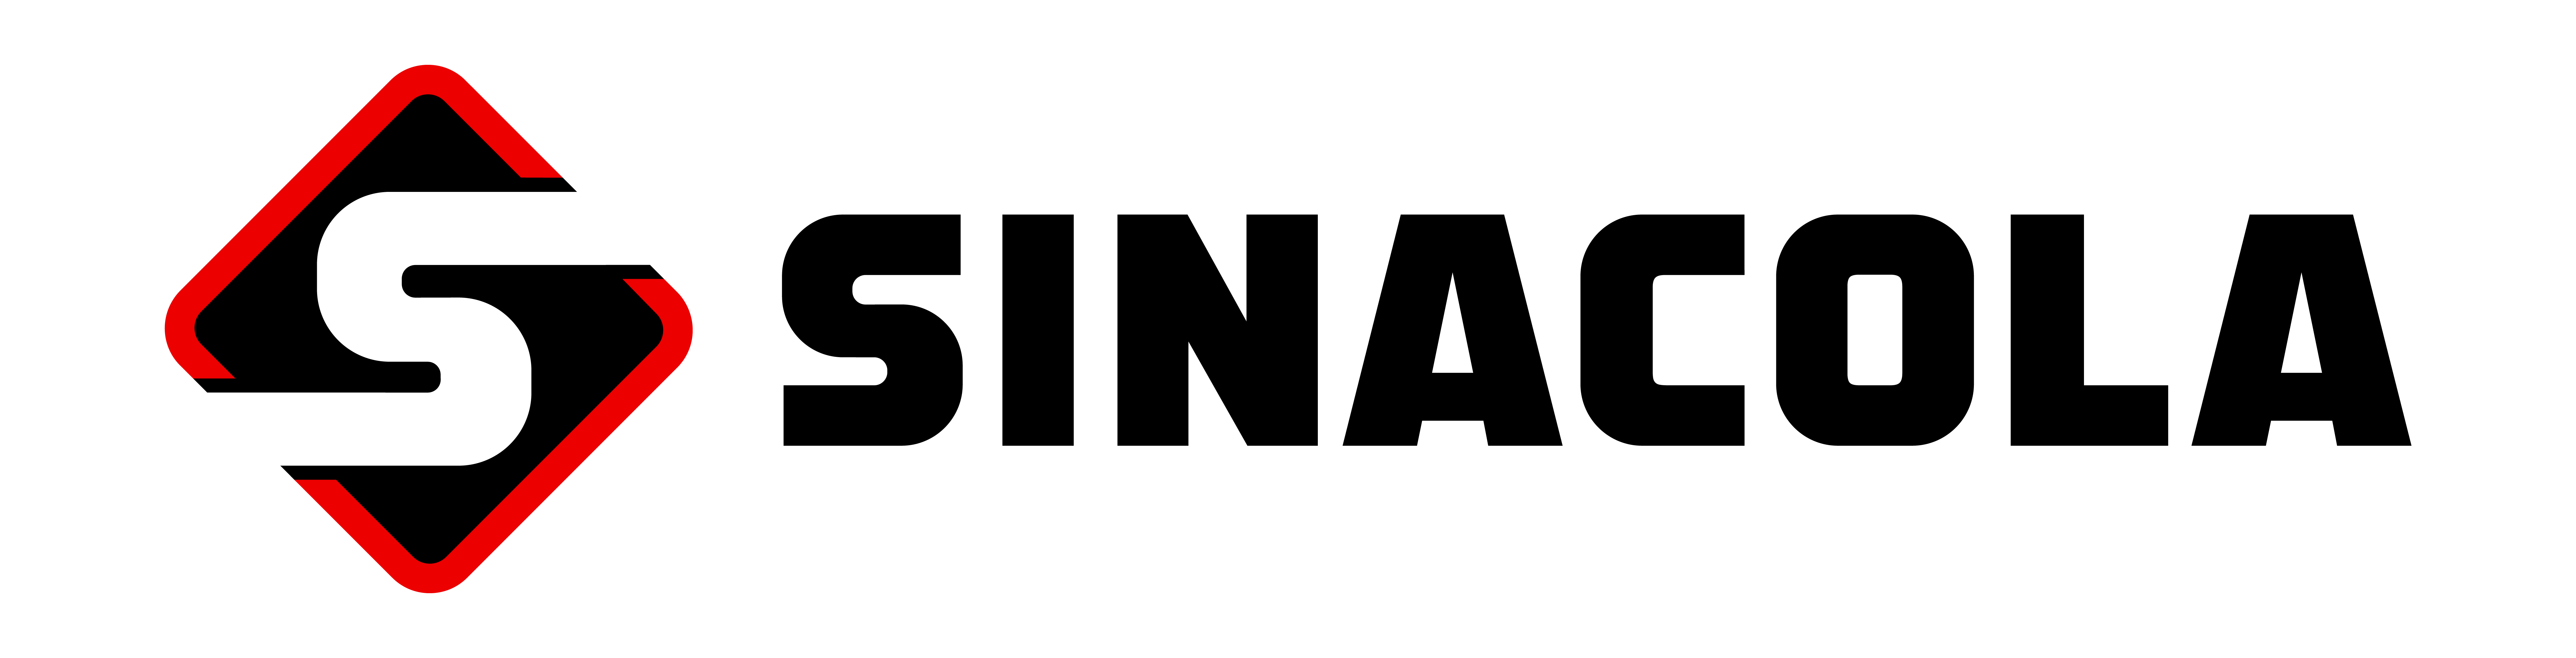 Sinacola logo